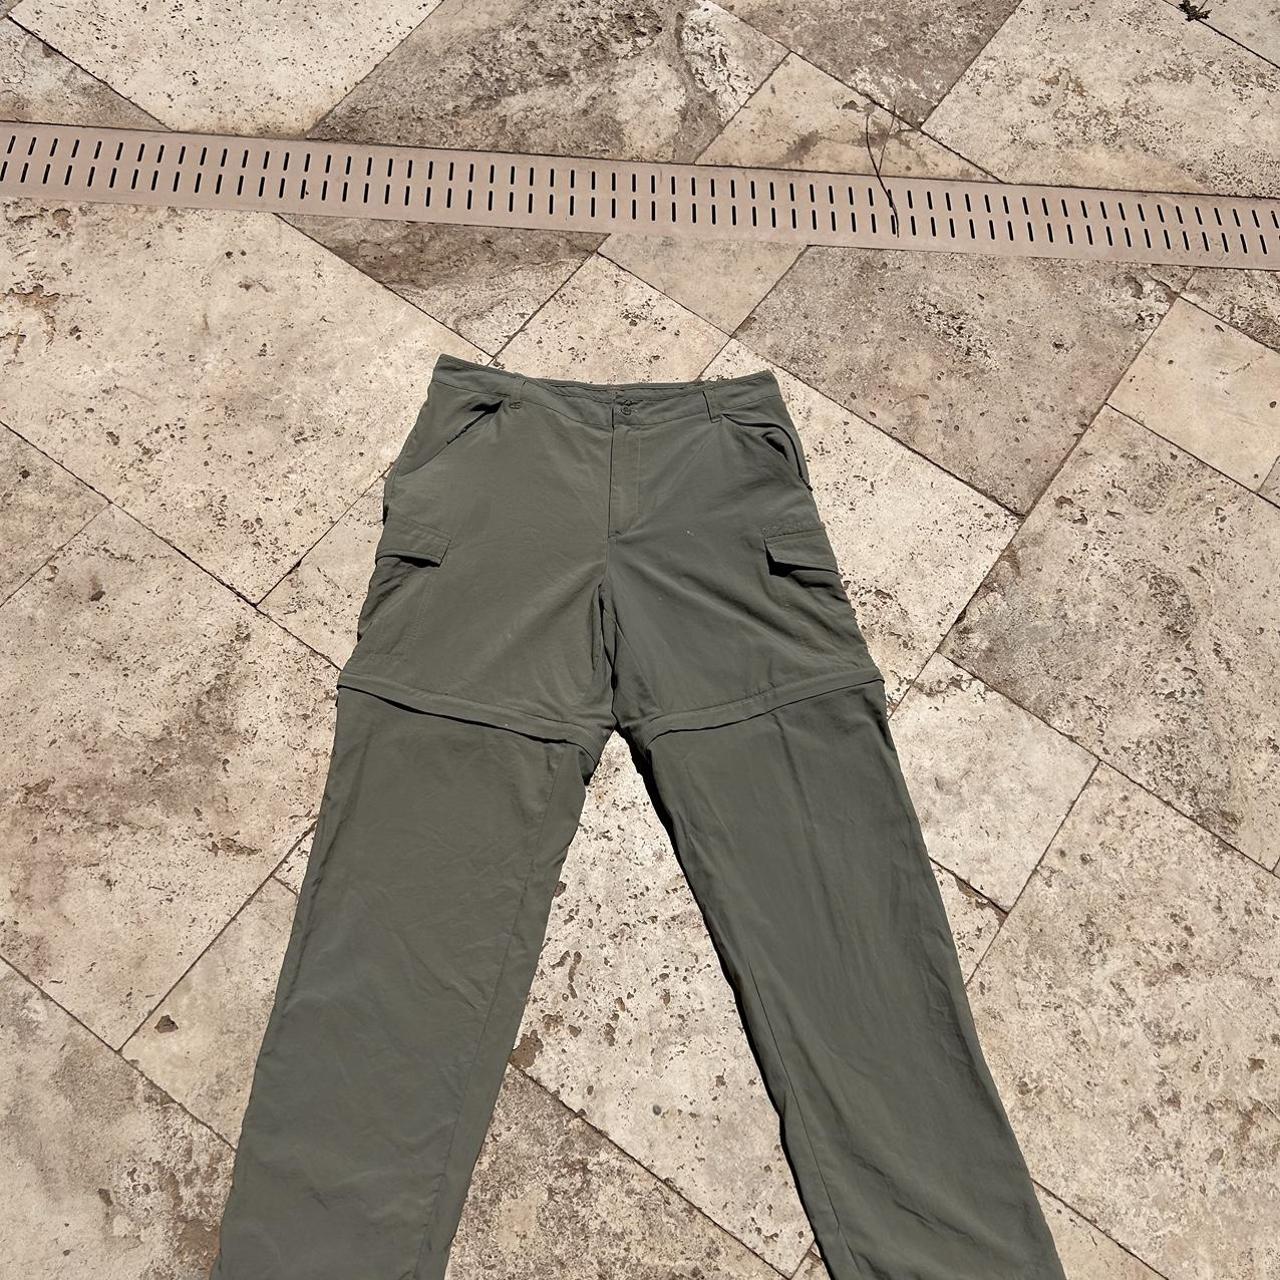 COOrun Women's Hiking Cargo Shorts Quick Dry Summer Half Pants Golf Travel  Athletic 8